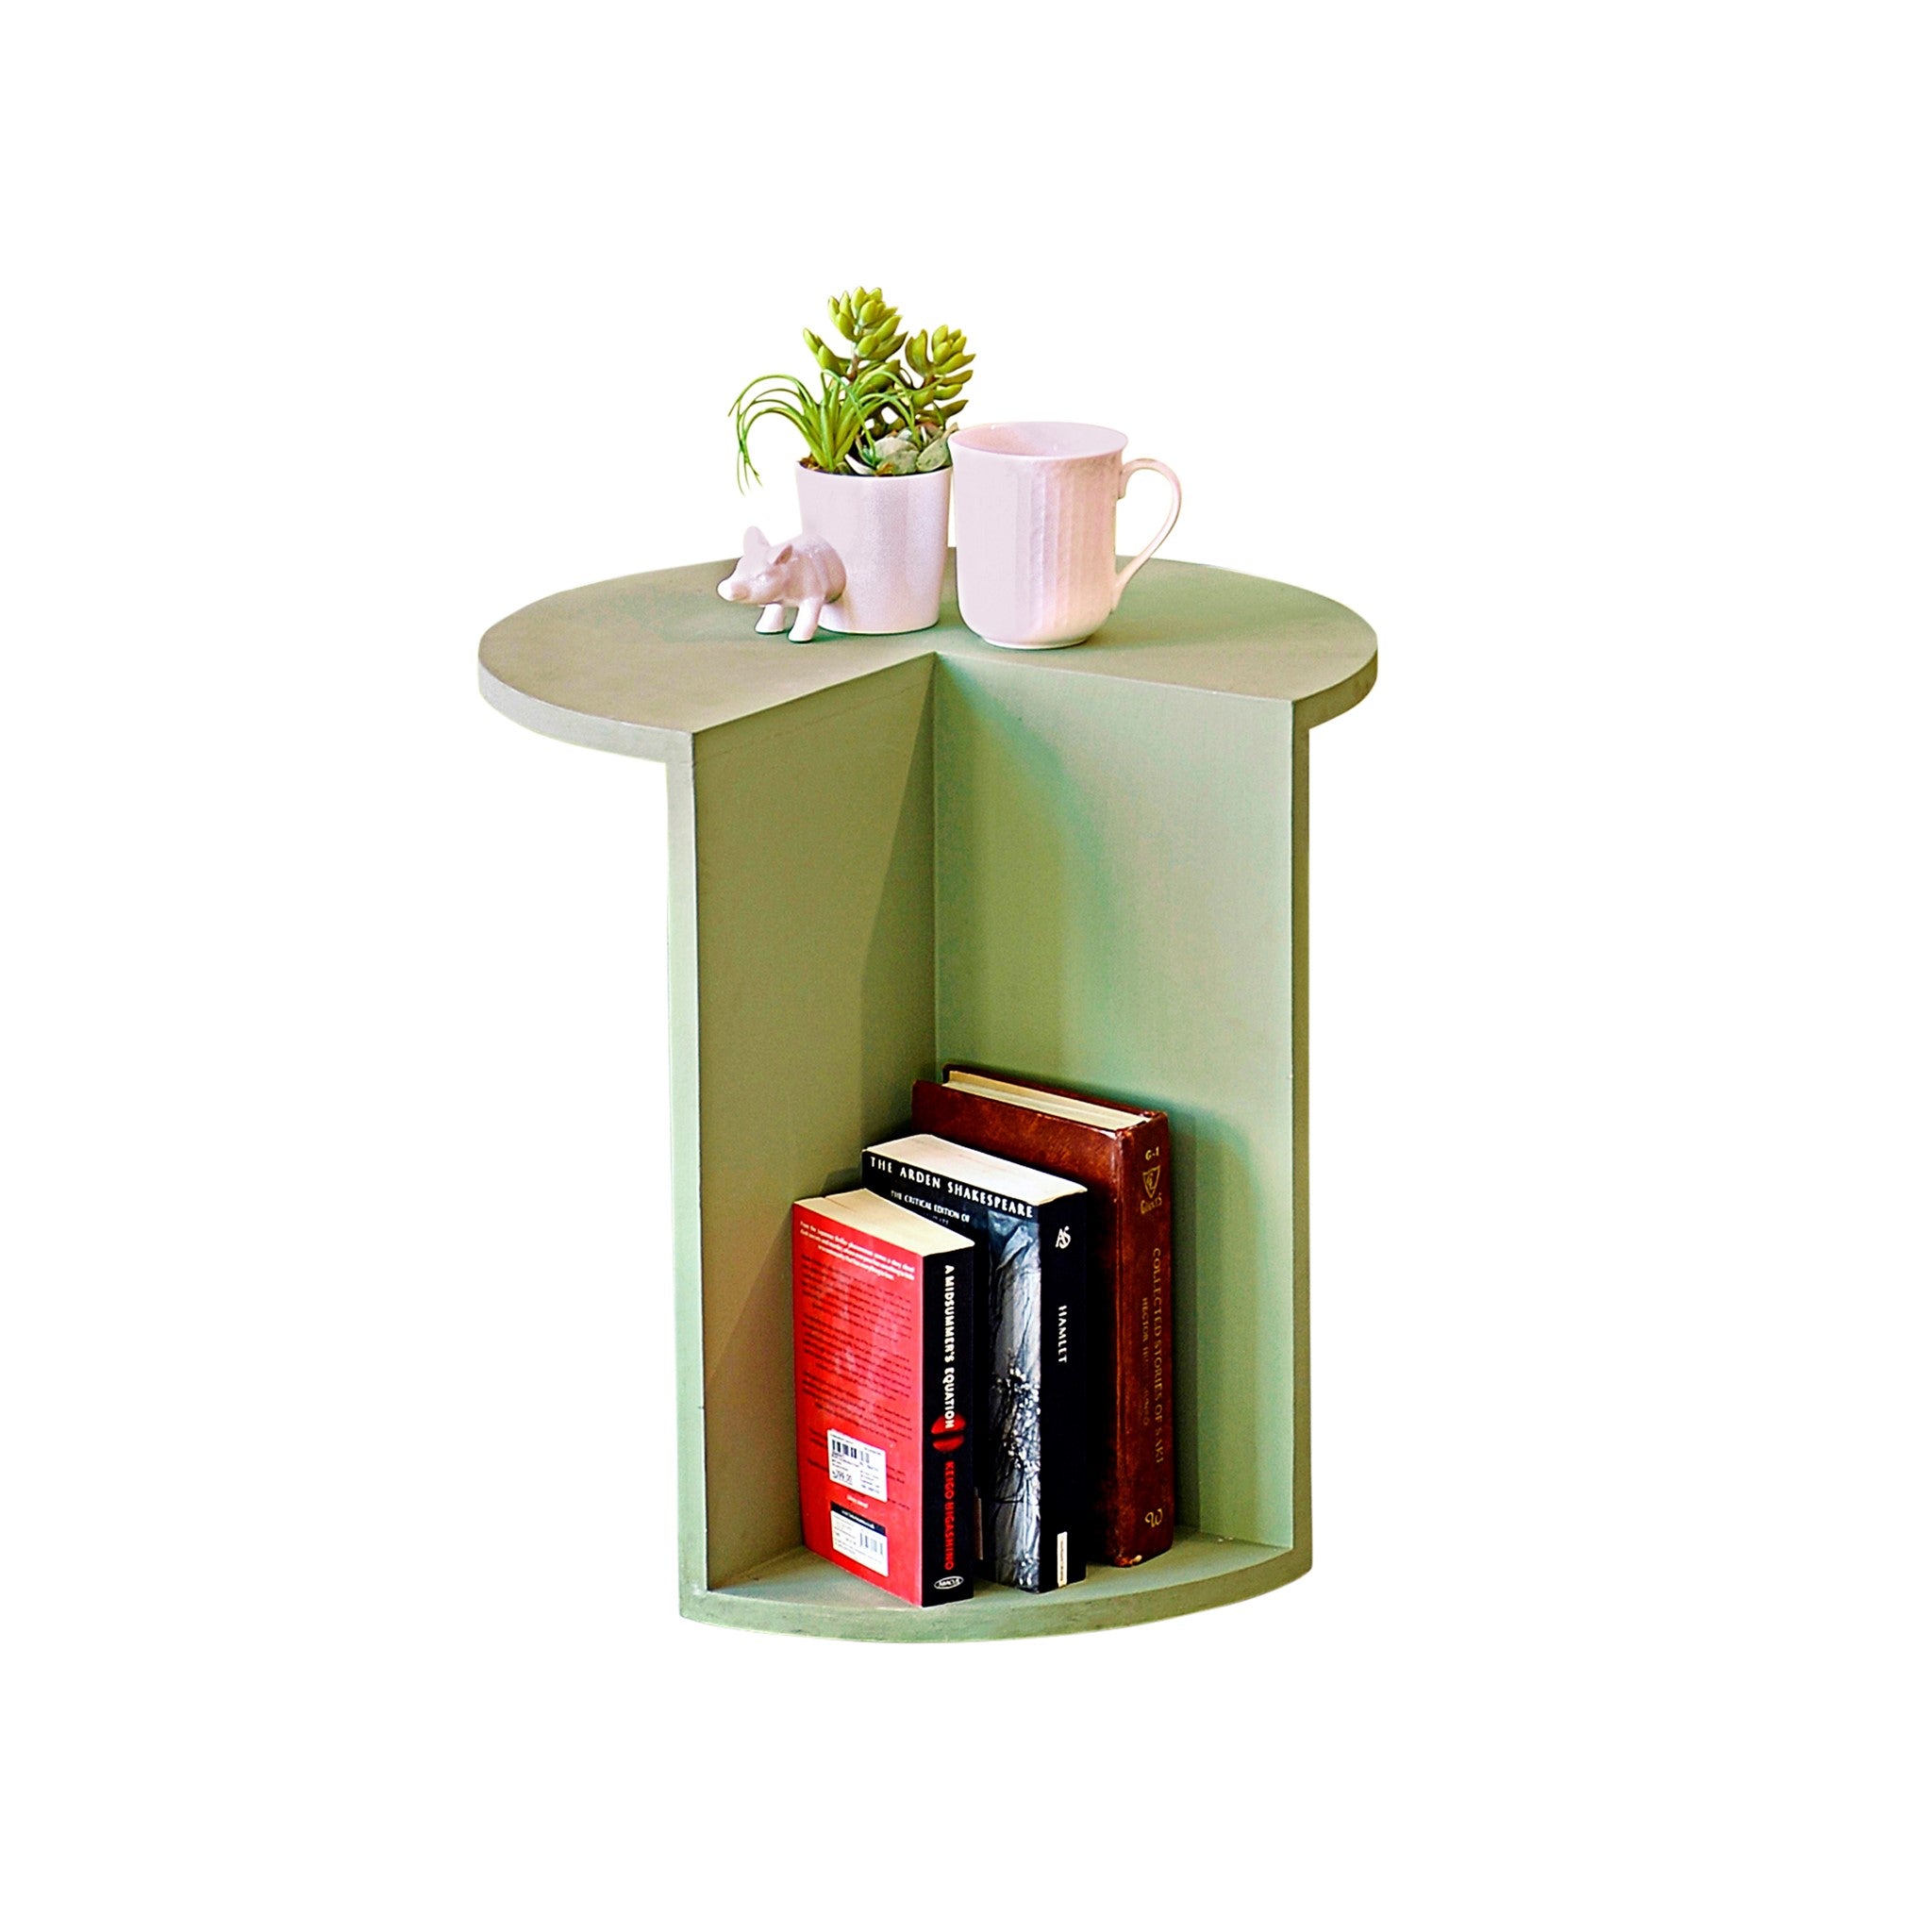 "Piece of Cake" Mini Table with Bookshelf 1 BHK Interiors